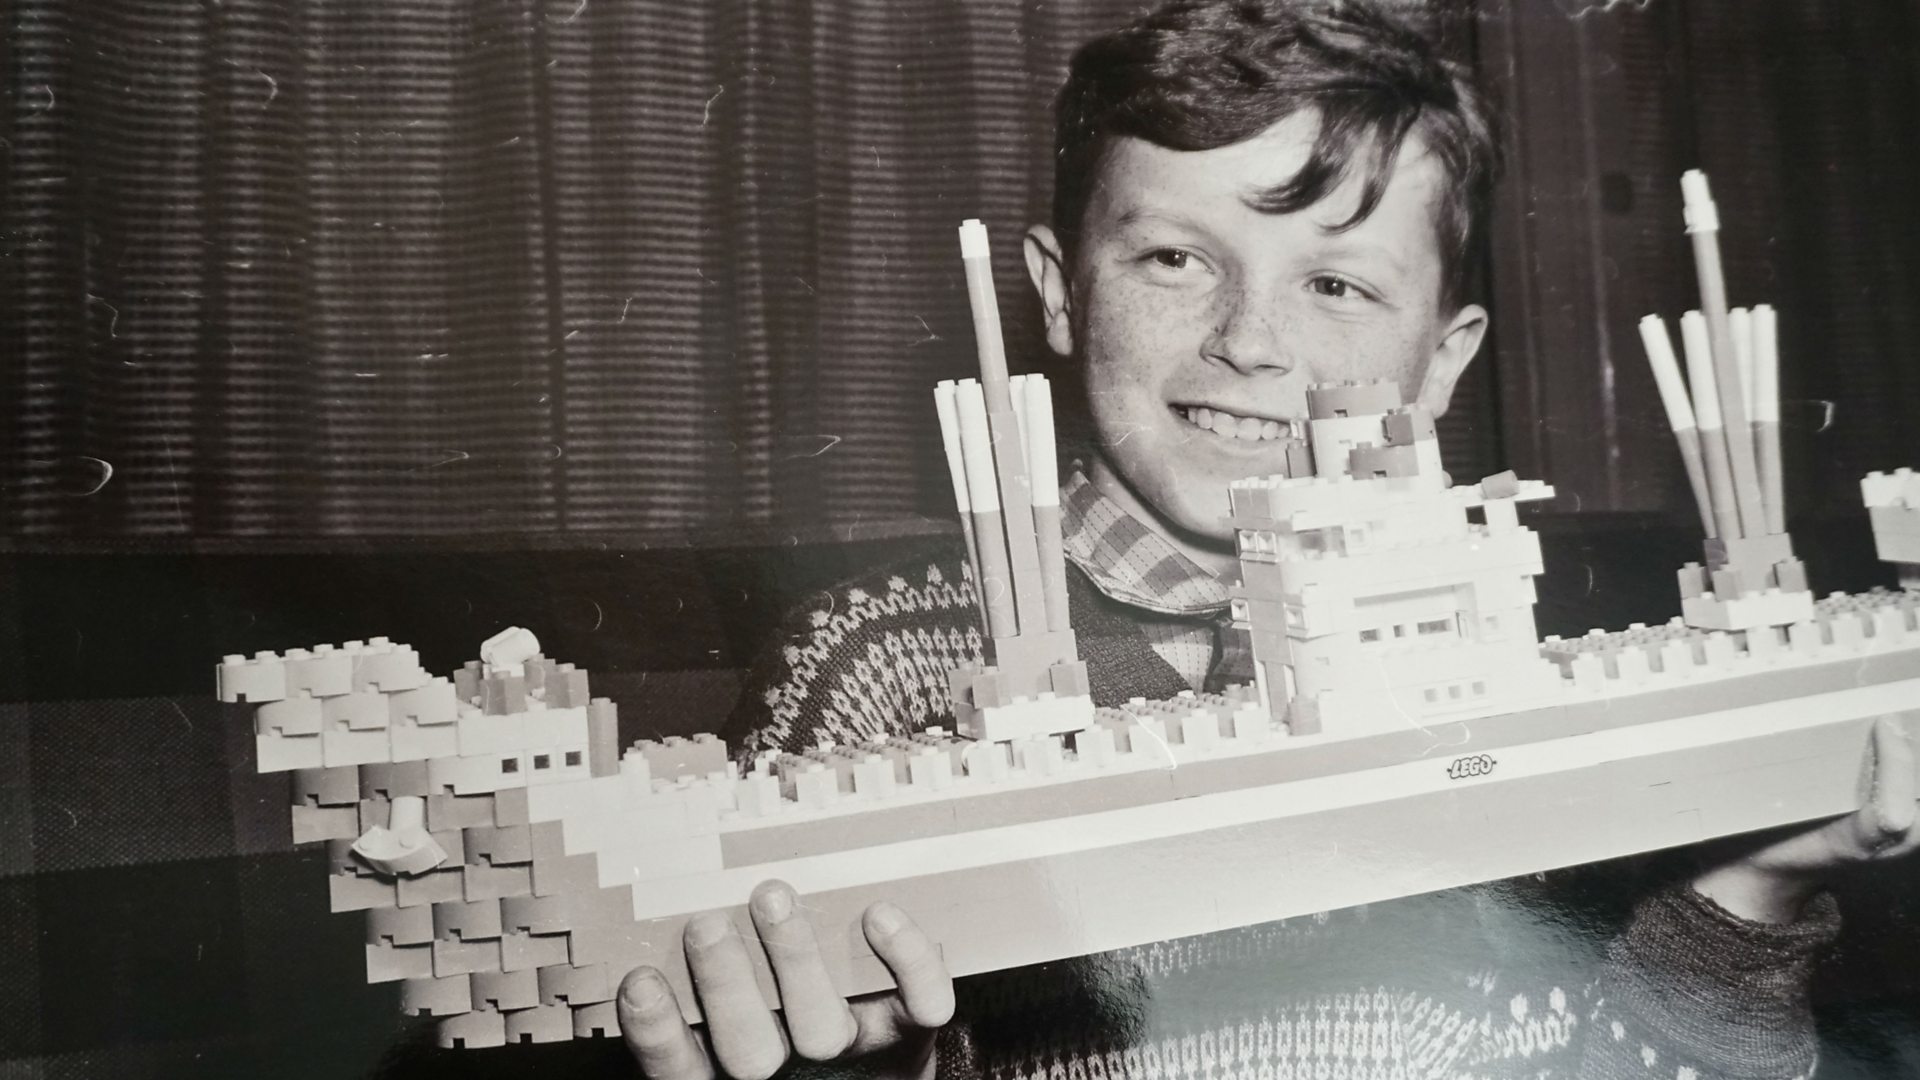 Lego: invention the legendary brick BBC News